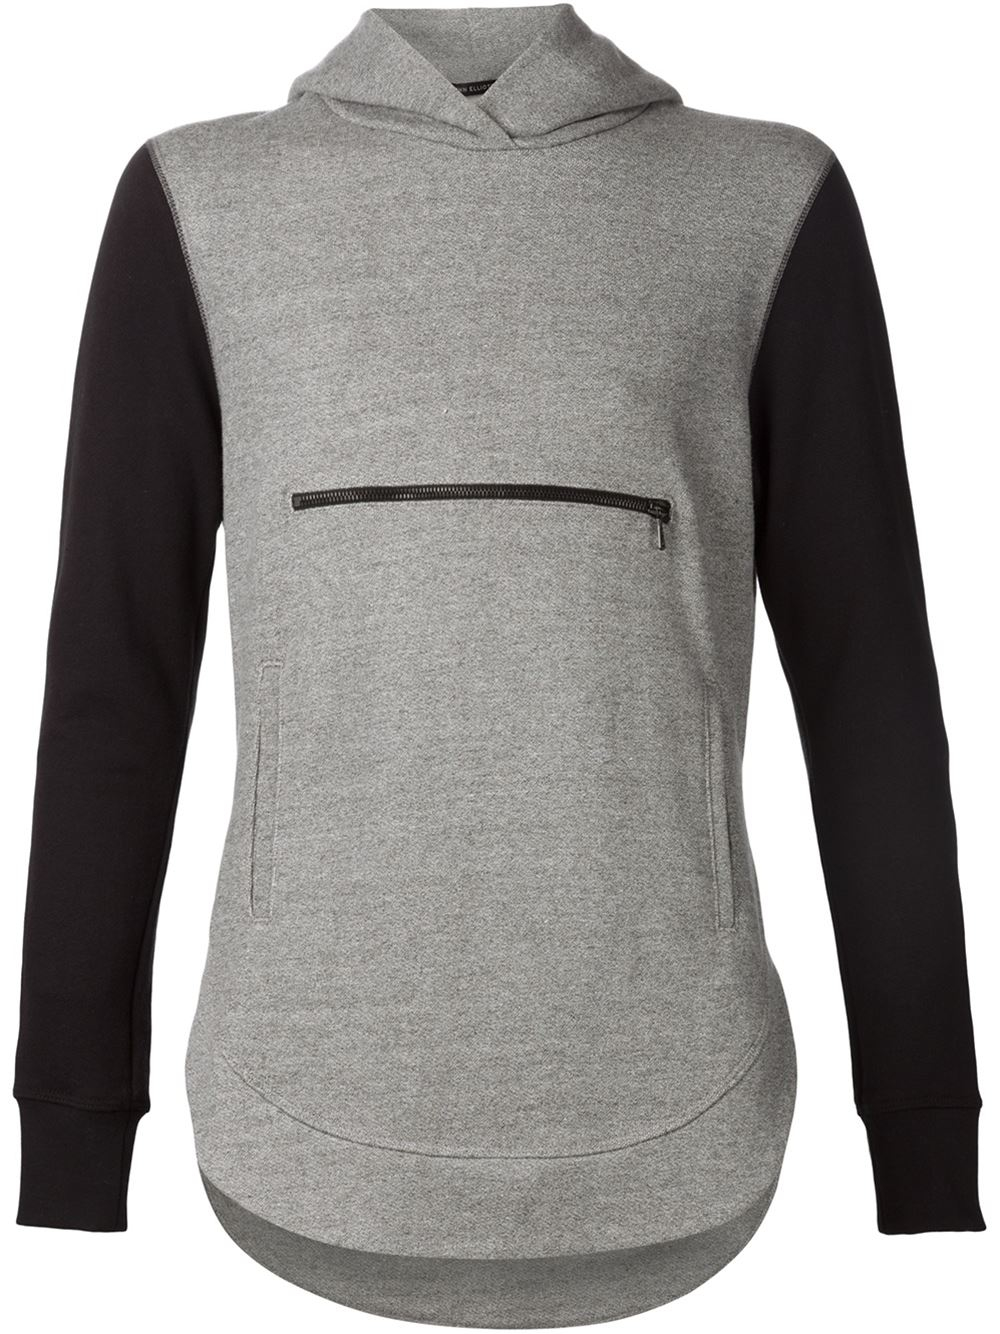 Lyst - John elliott Front Zip Pocket Hoodie in Gray for Men